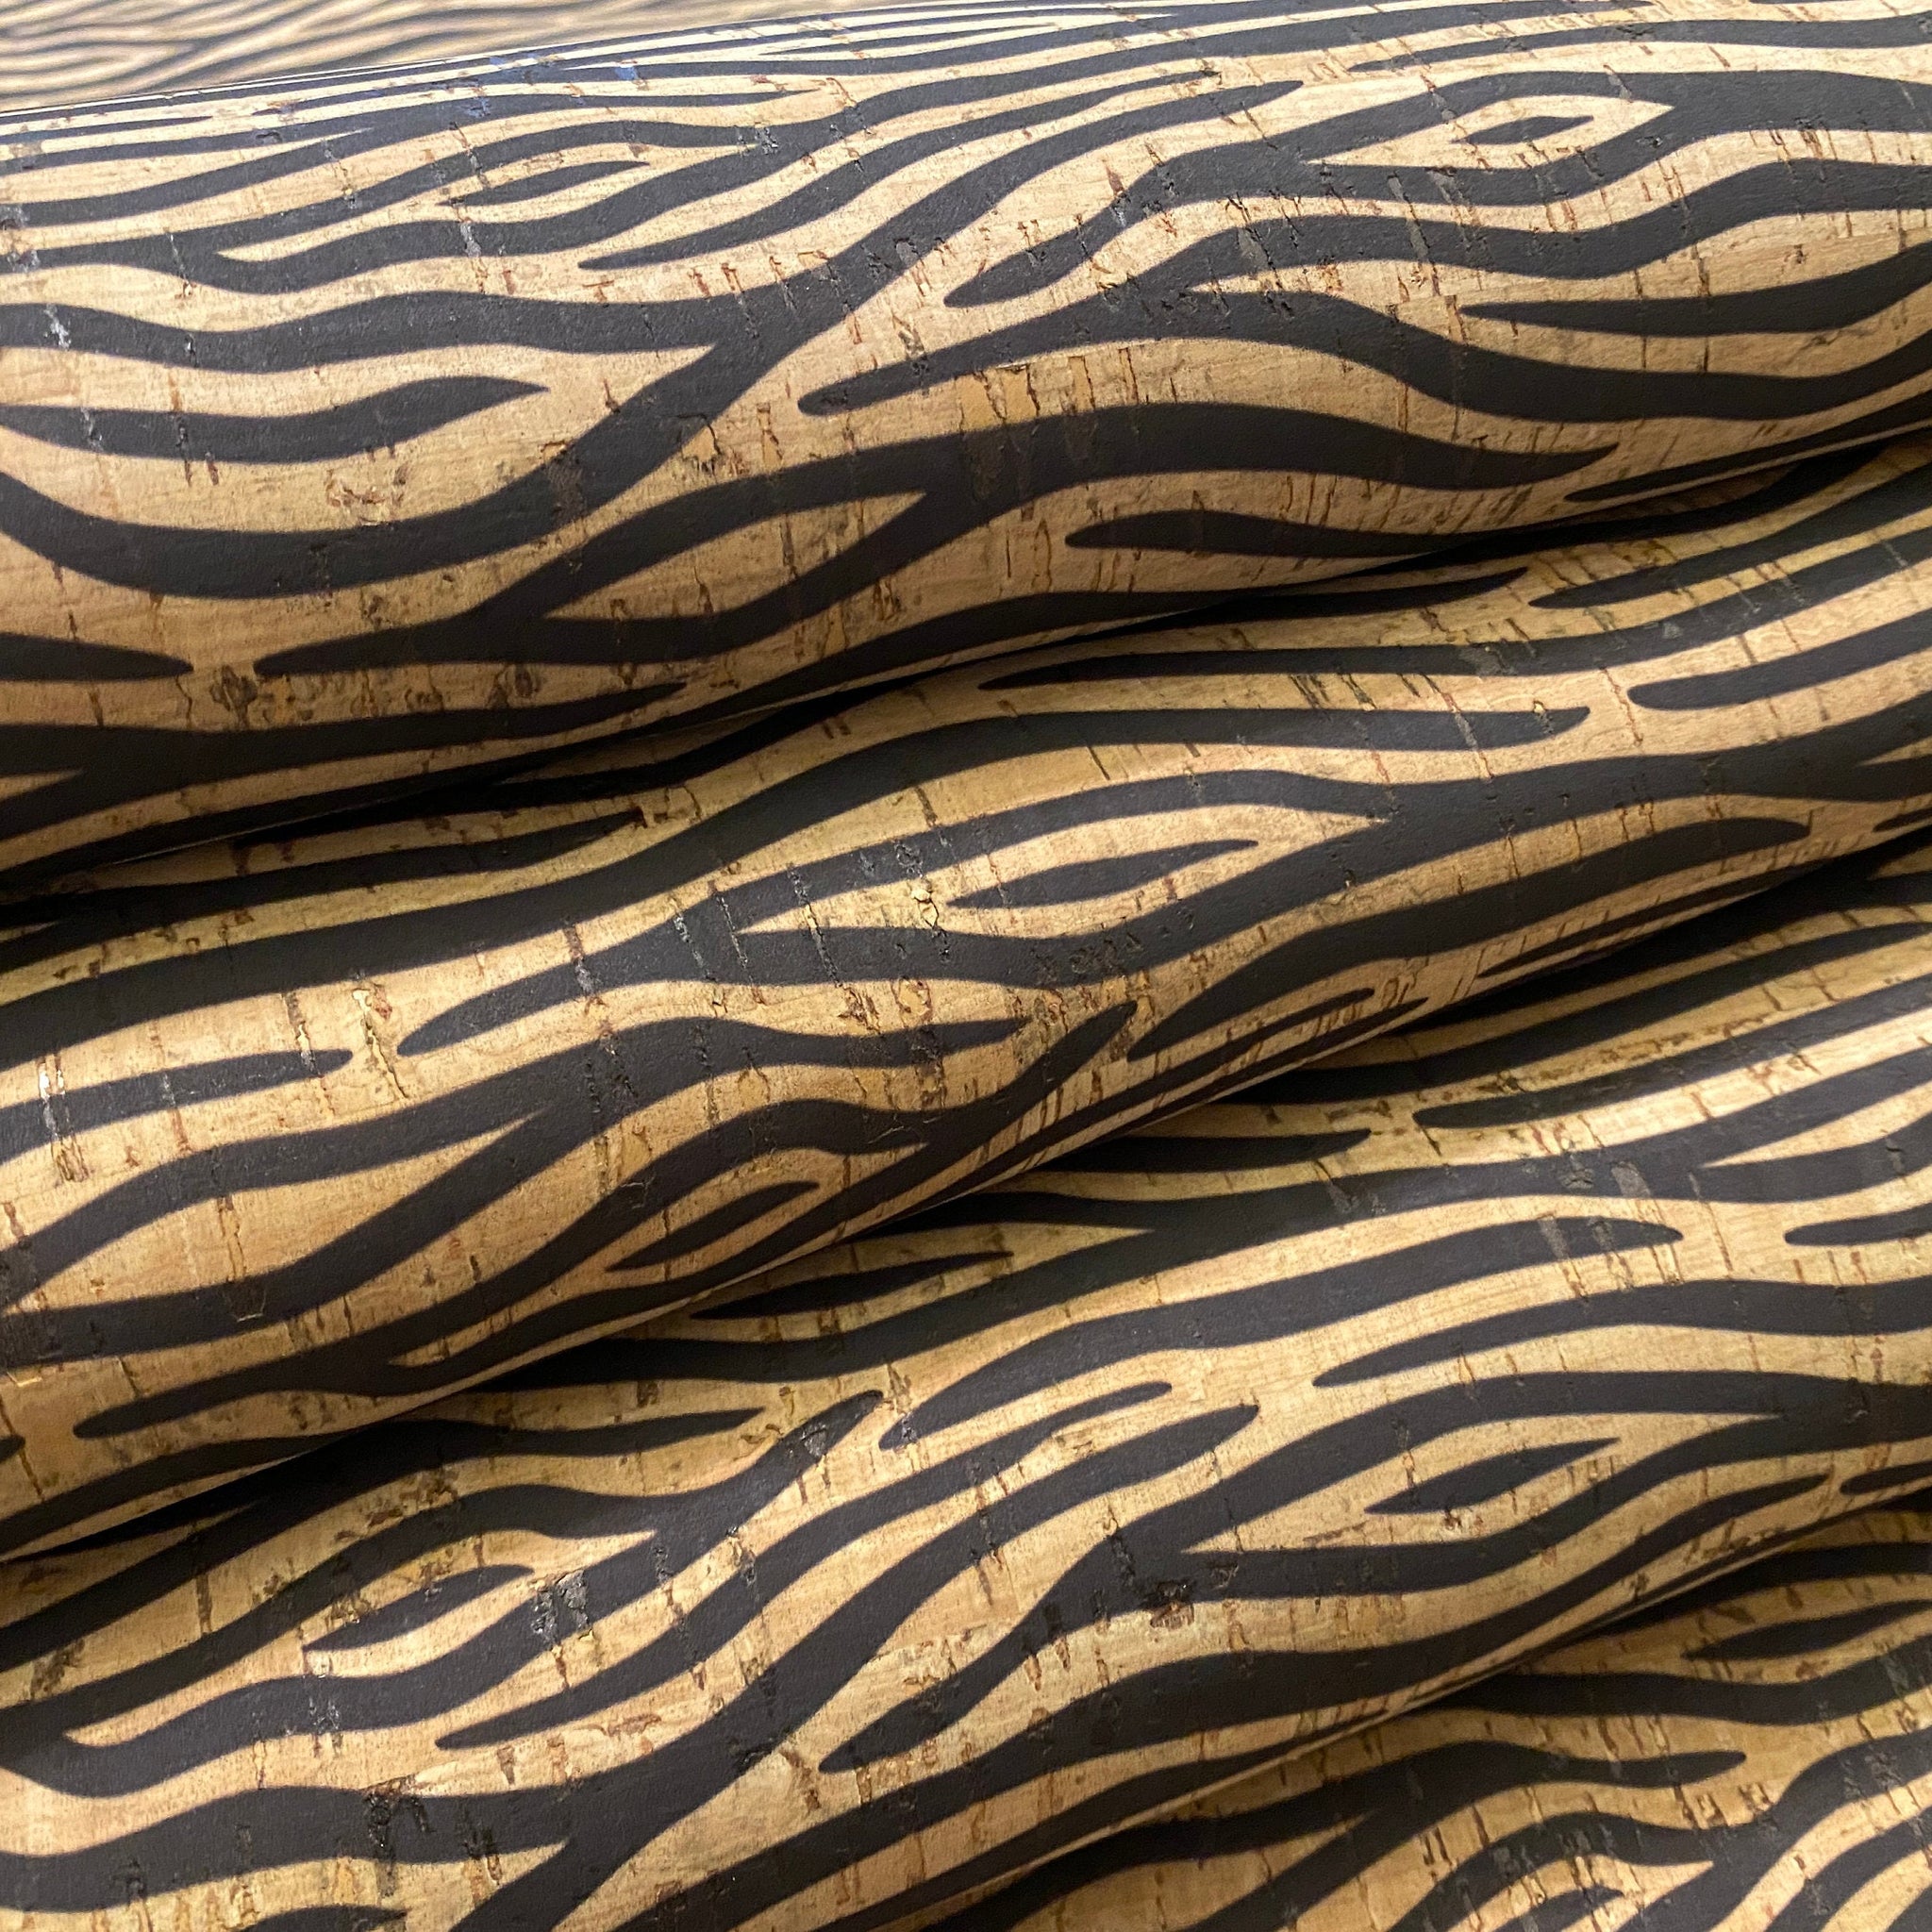 Cork Fabric - Zebra Print on Natural